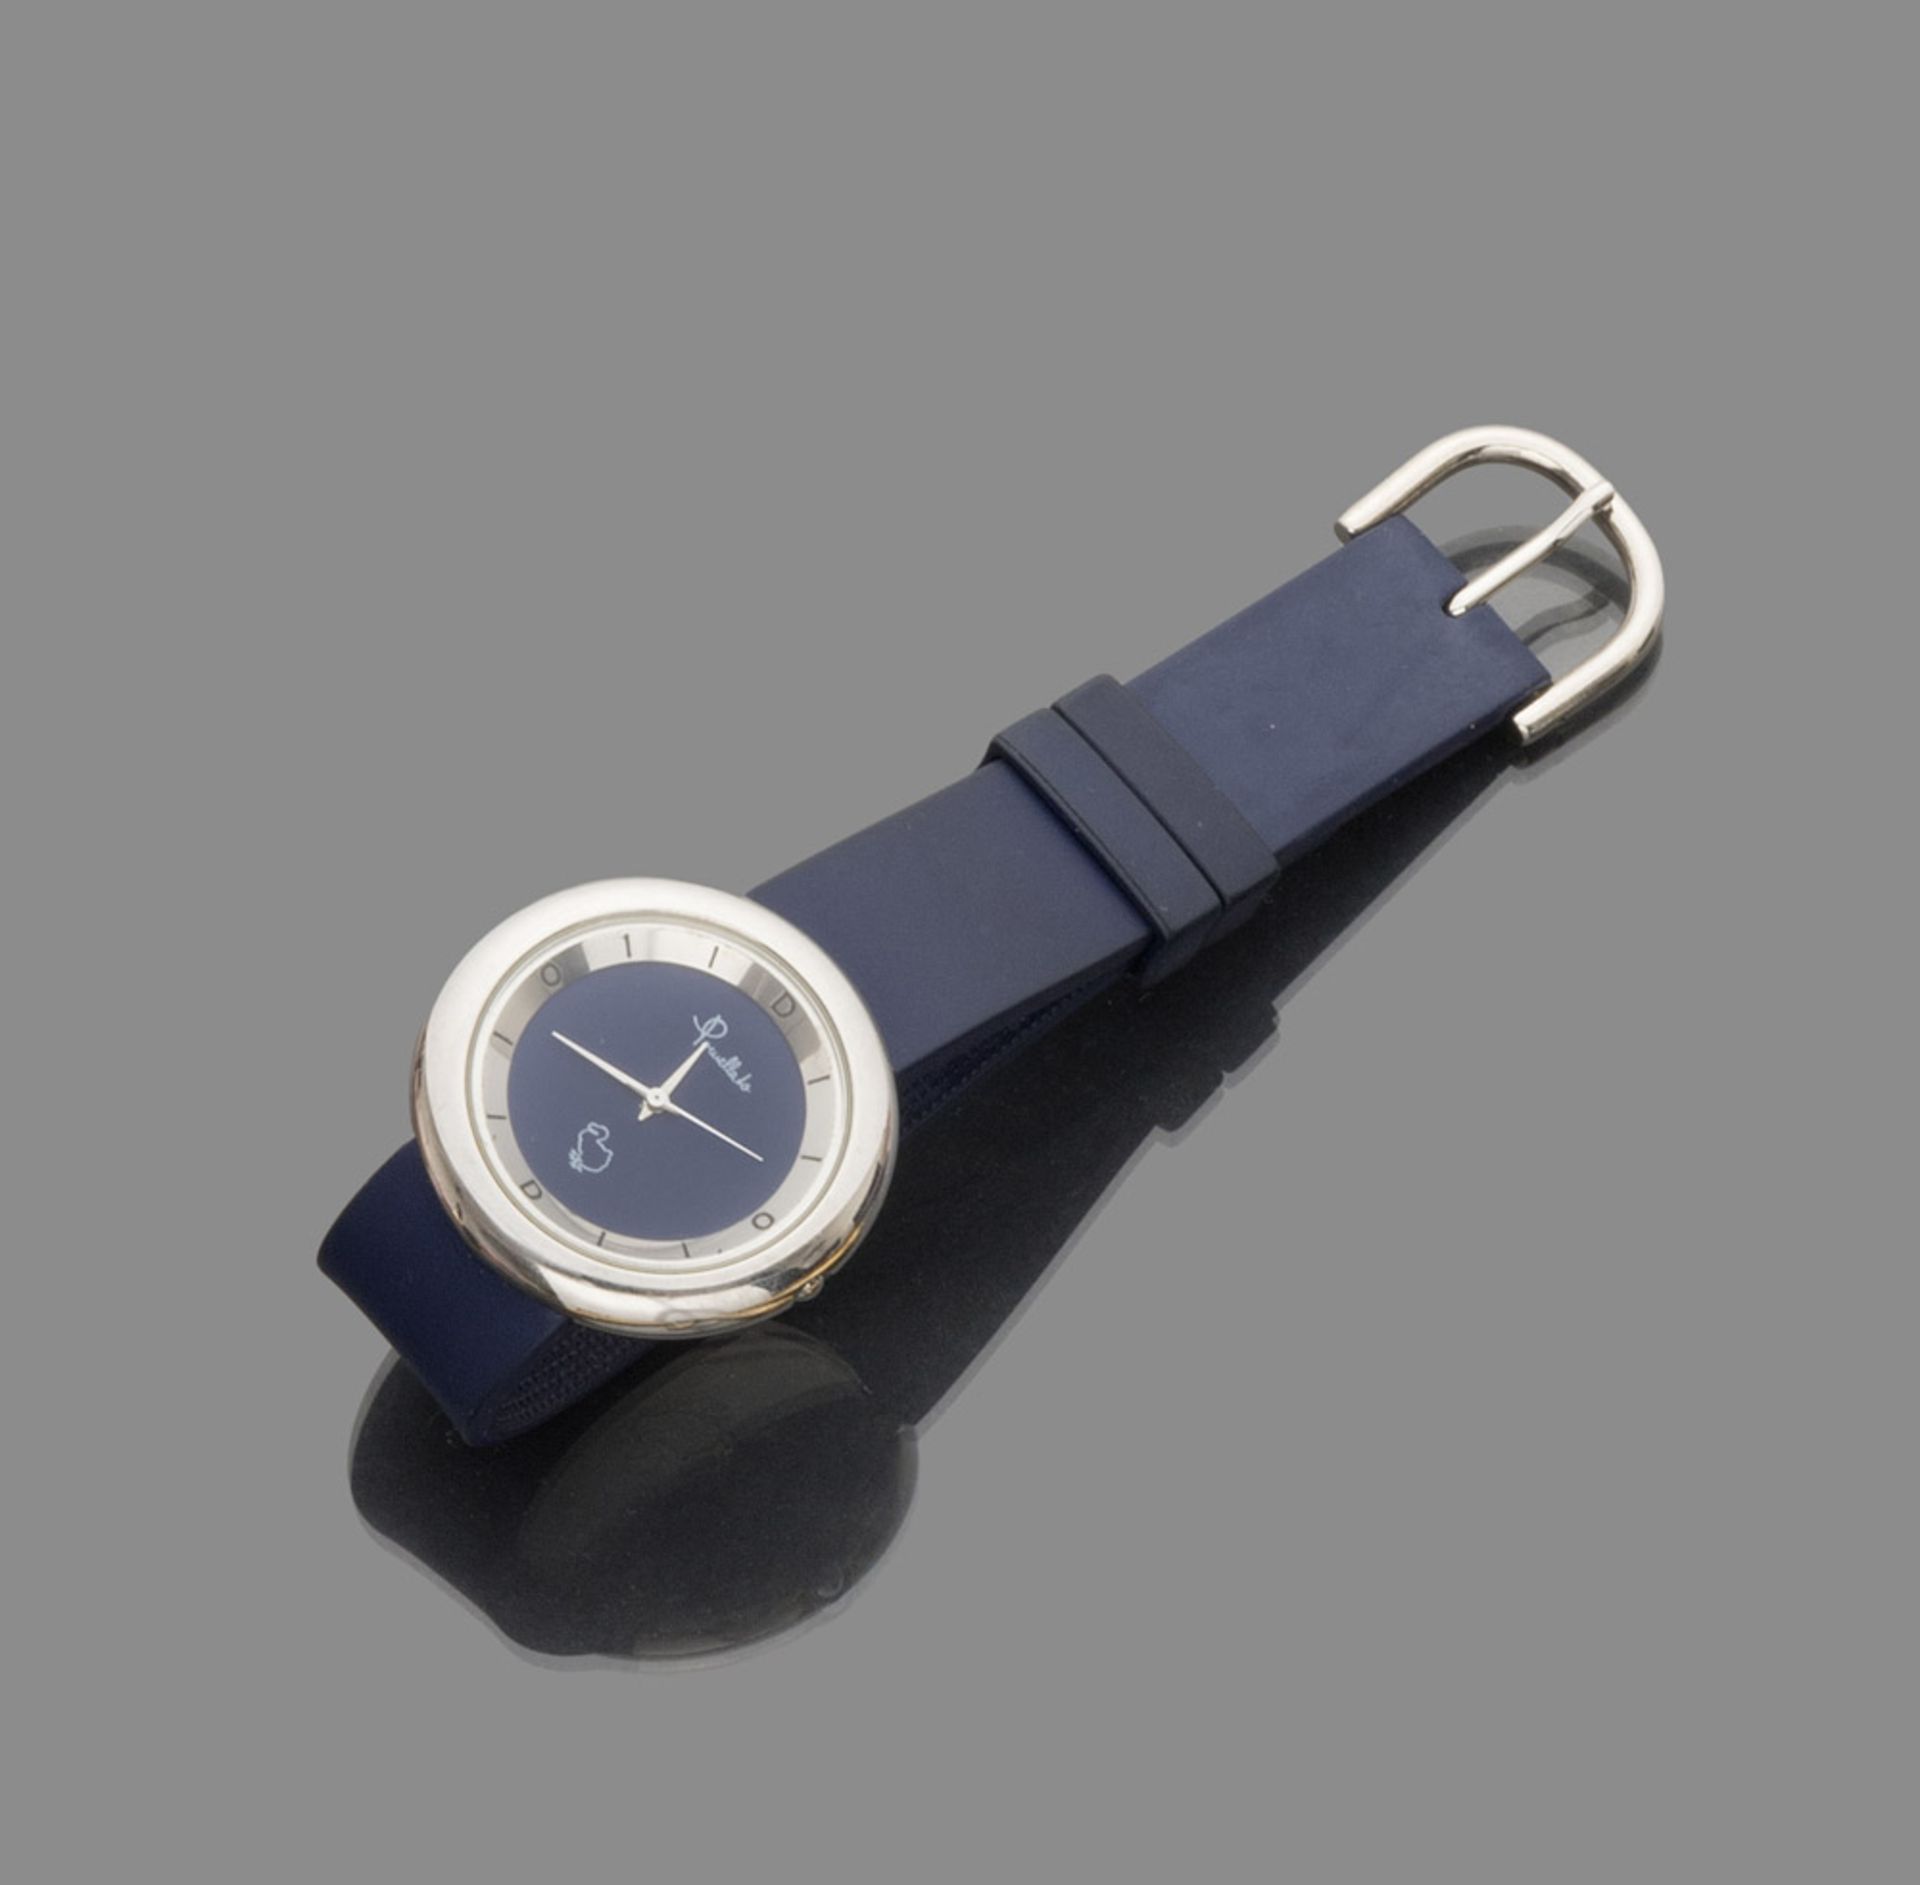 WRIST WATCH, BRAND POMELLATO steel case, automatic movement and blue glazed dial. Blue rubber strap.